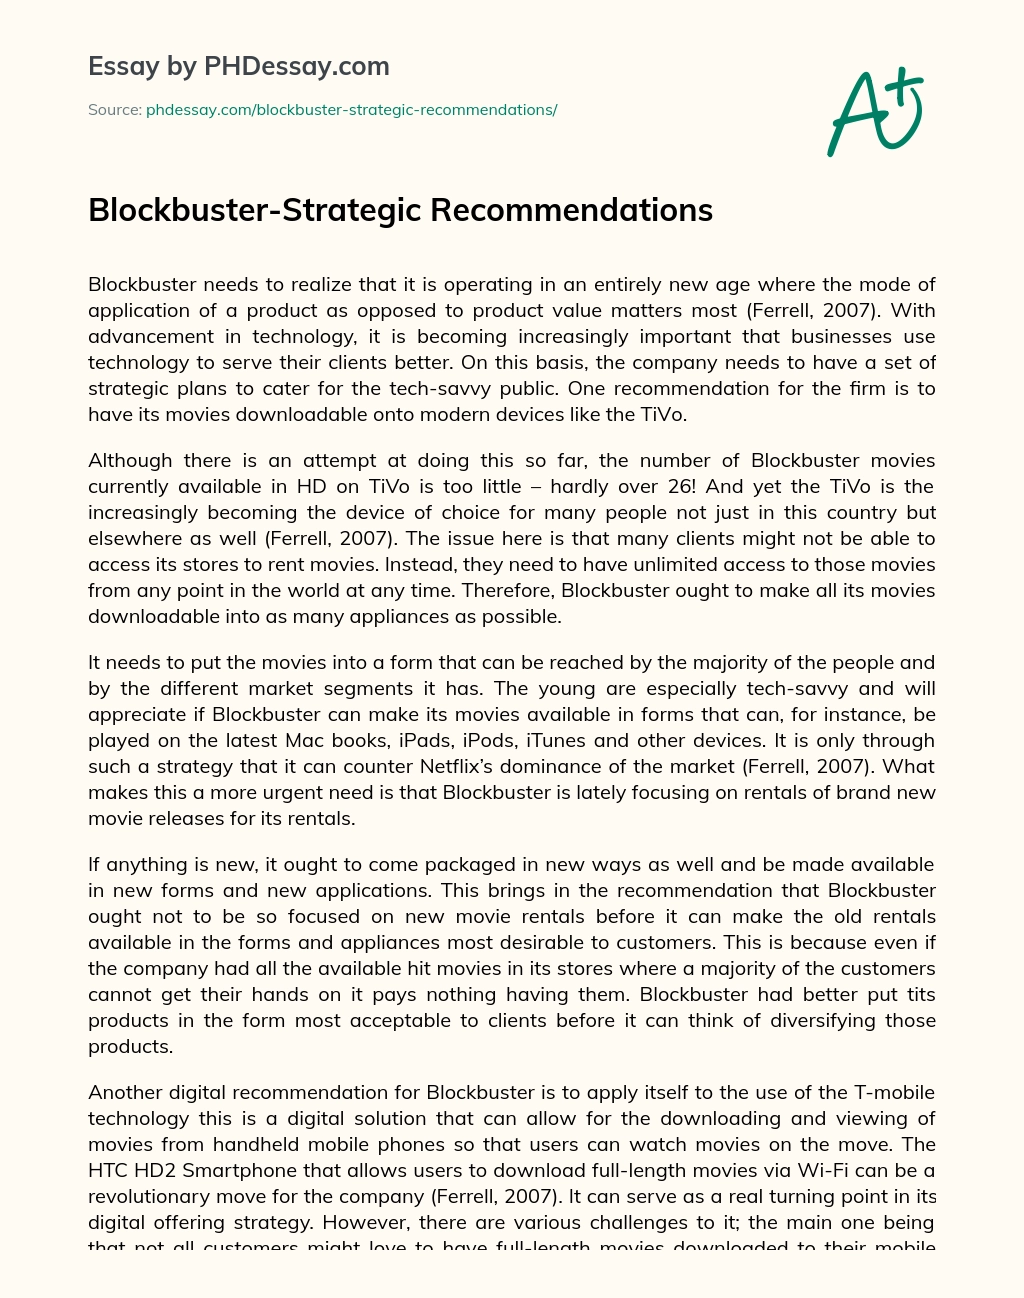 Blockbuster-Strategic Recommendations essay